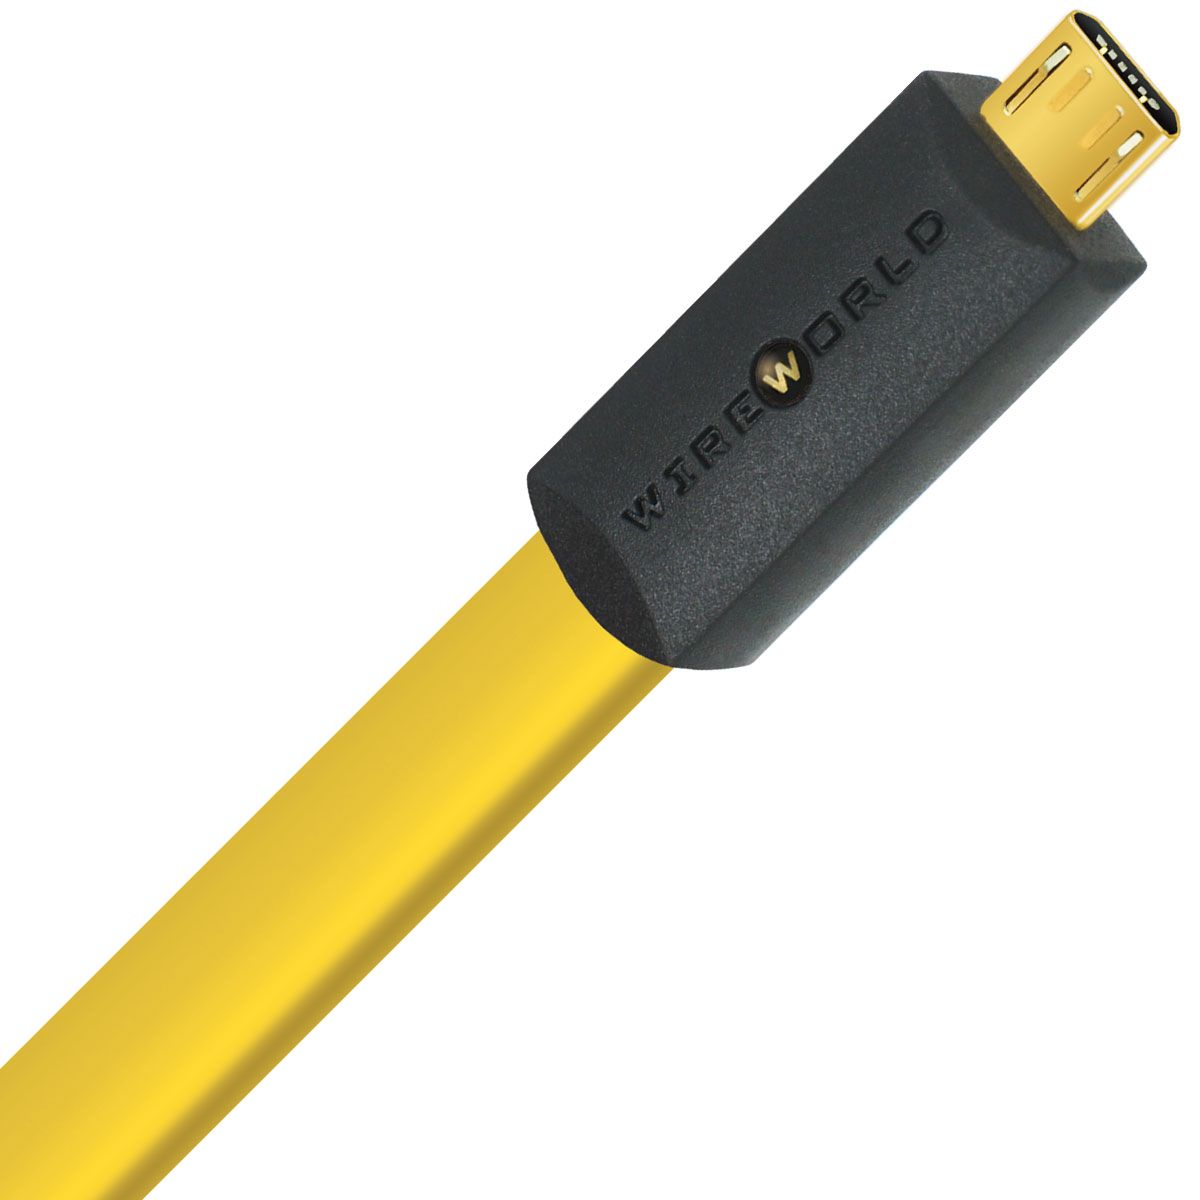 WIREWORLD Chroma 8 USB 2.0 A to B/ 0.6M